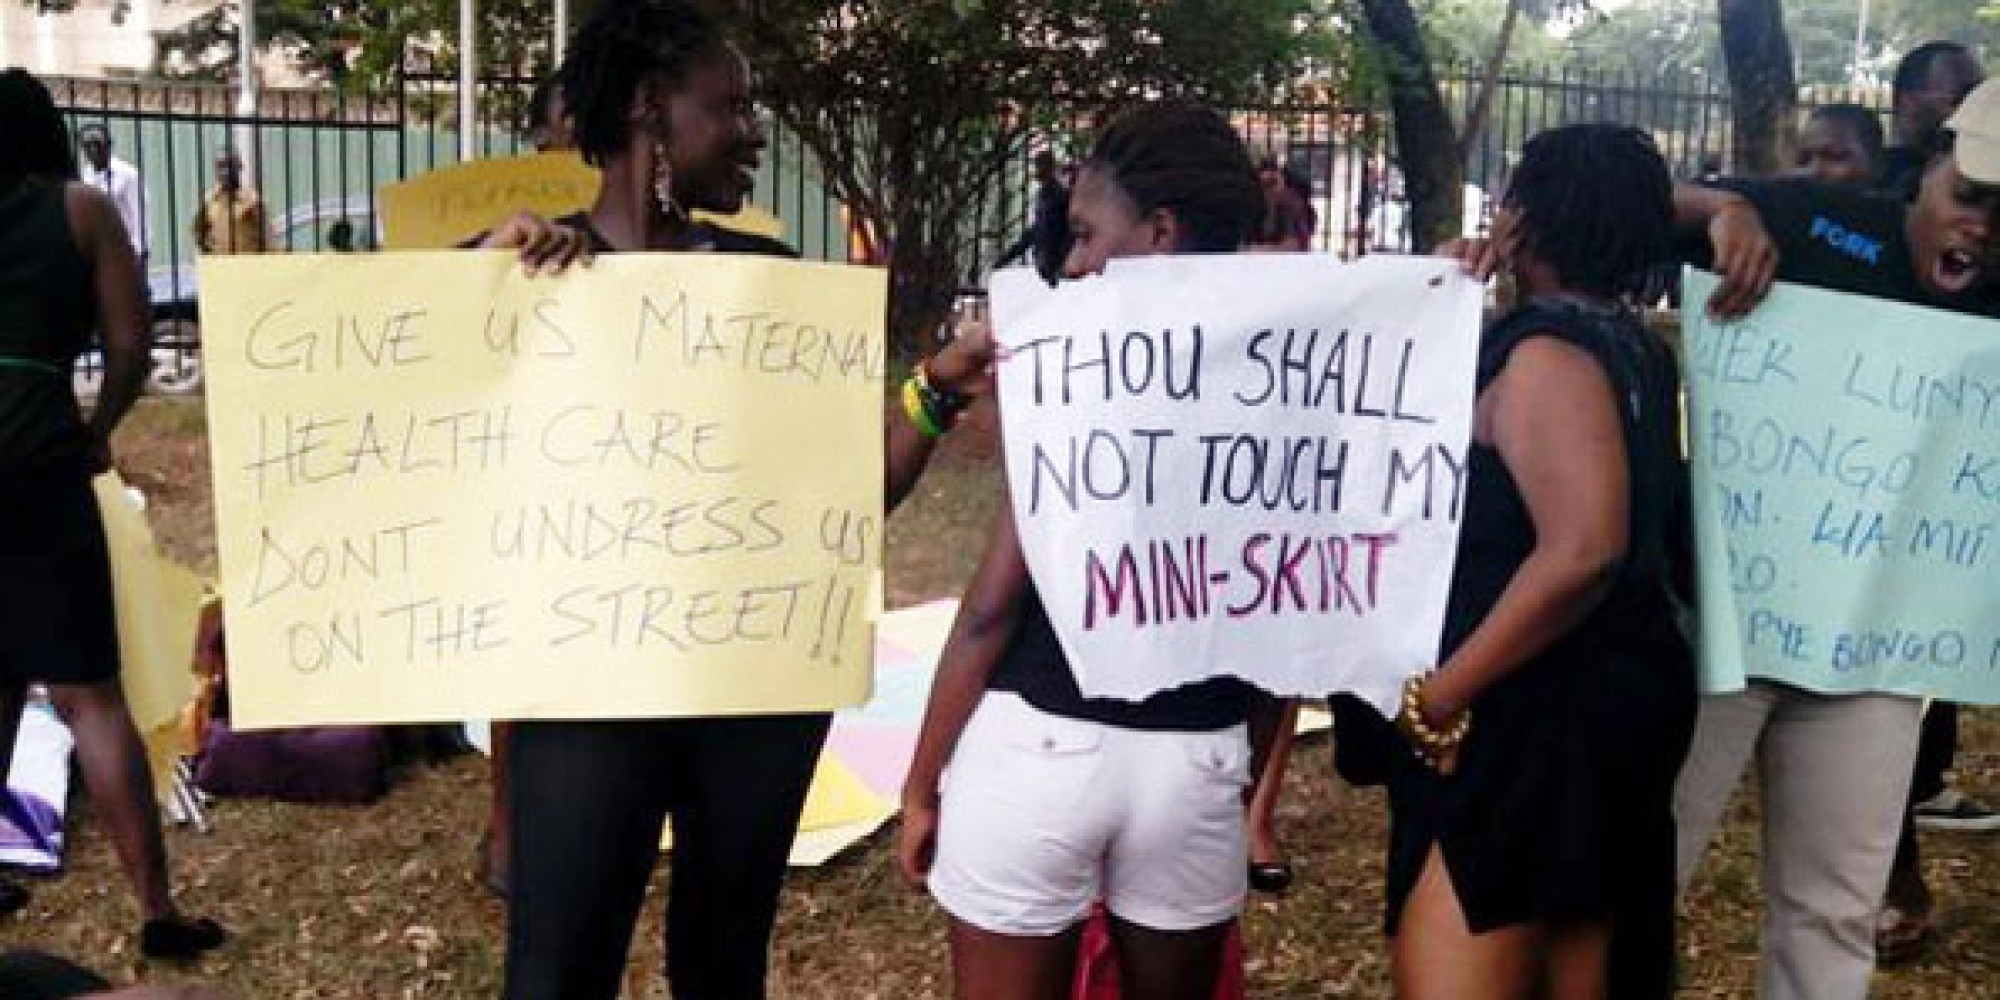 Uganda miniskirt ban: Police stop protest march - BBC News